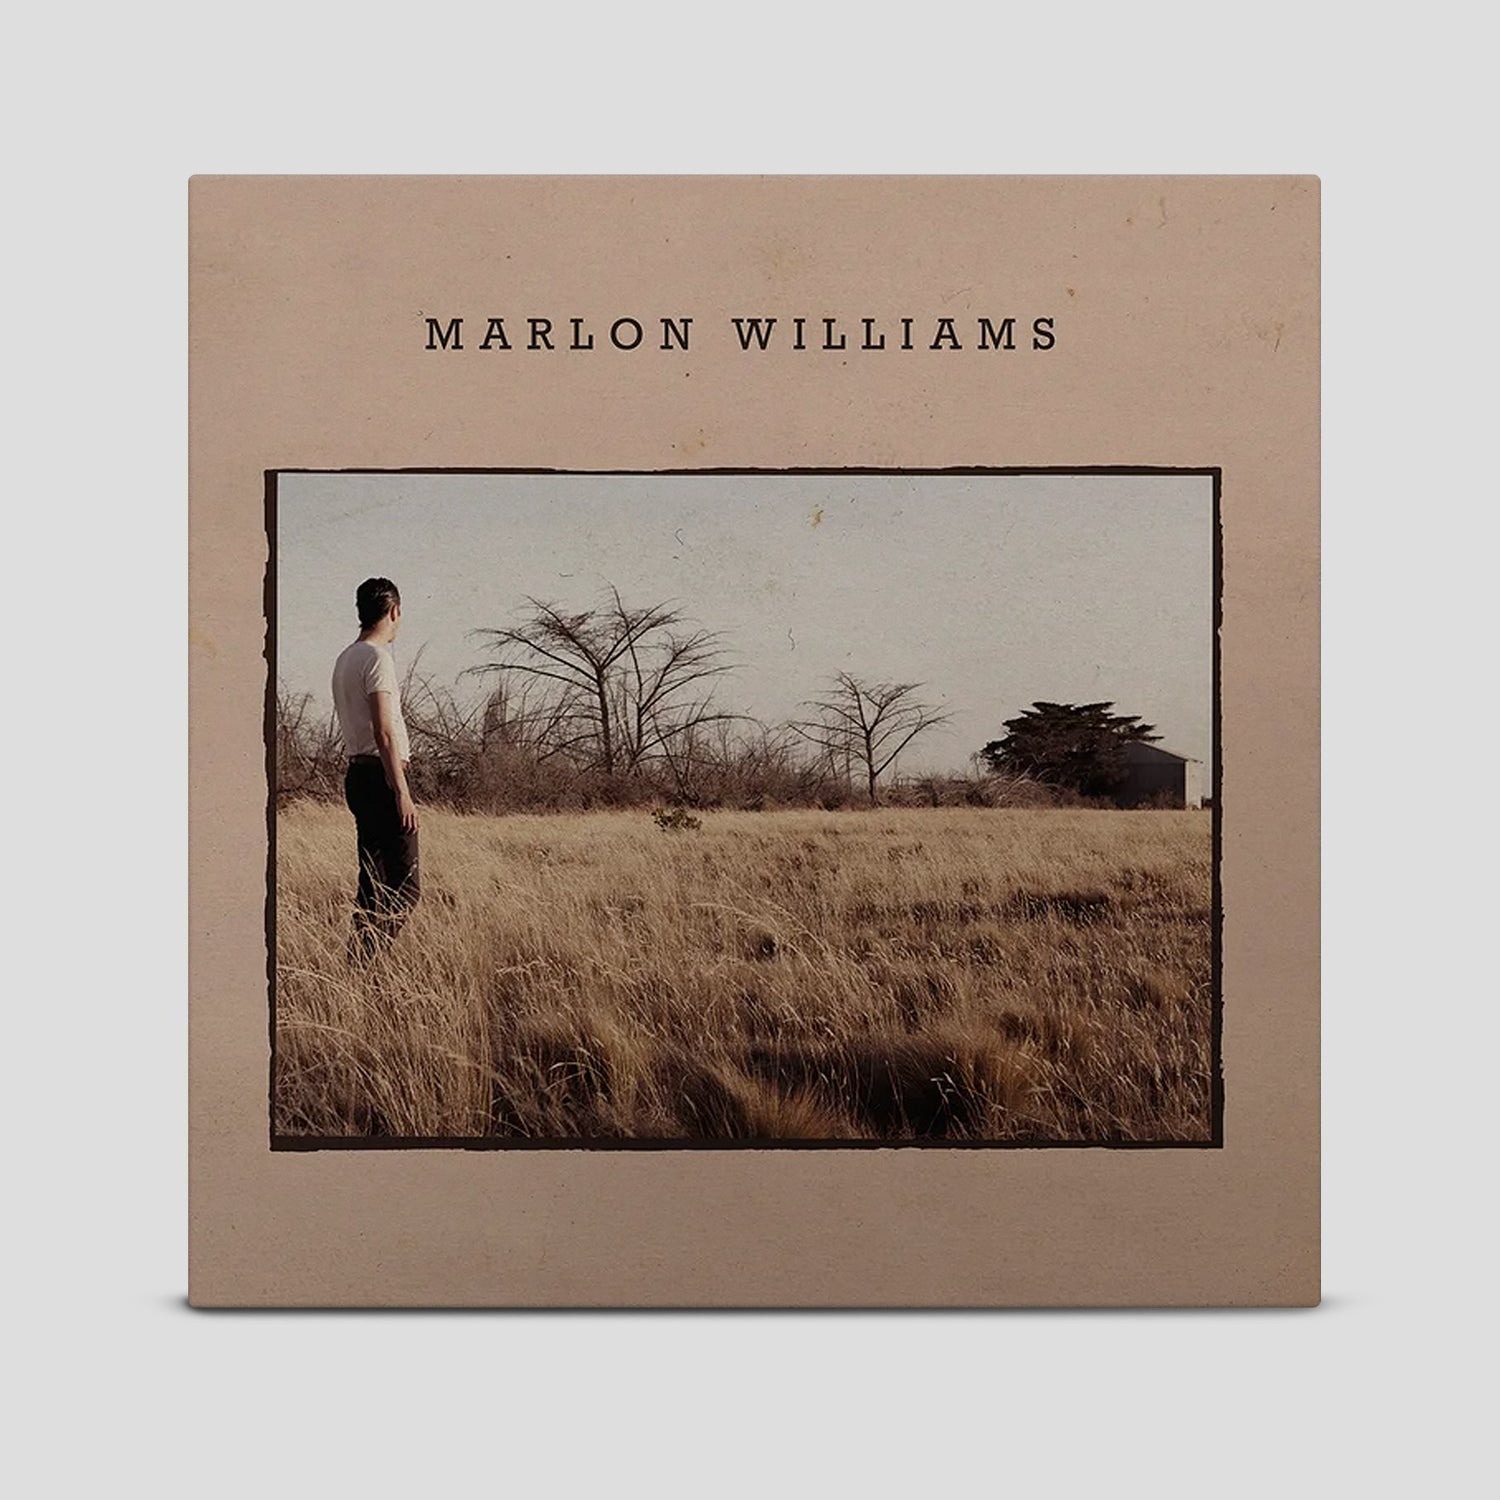 MARLON WILLIAMS "S/T" LP